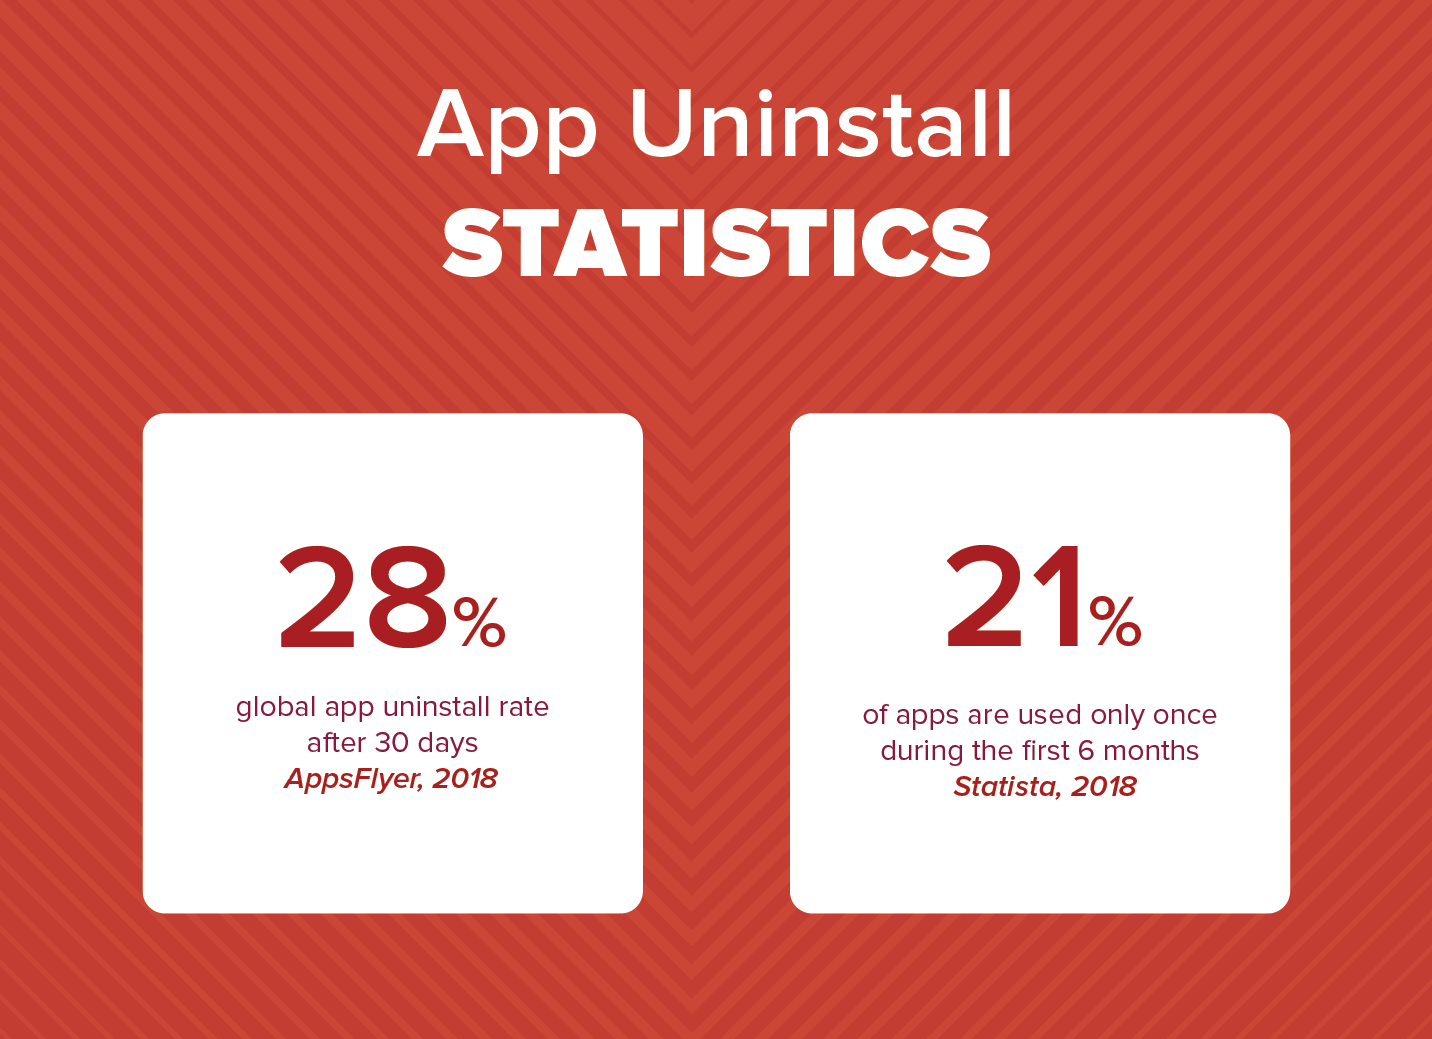 AR: App uninstall statistics that include global app uninstall rates 